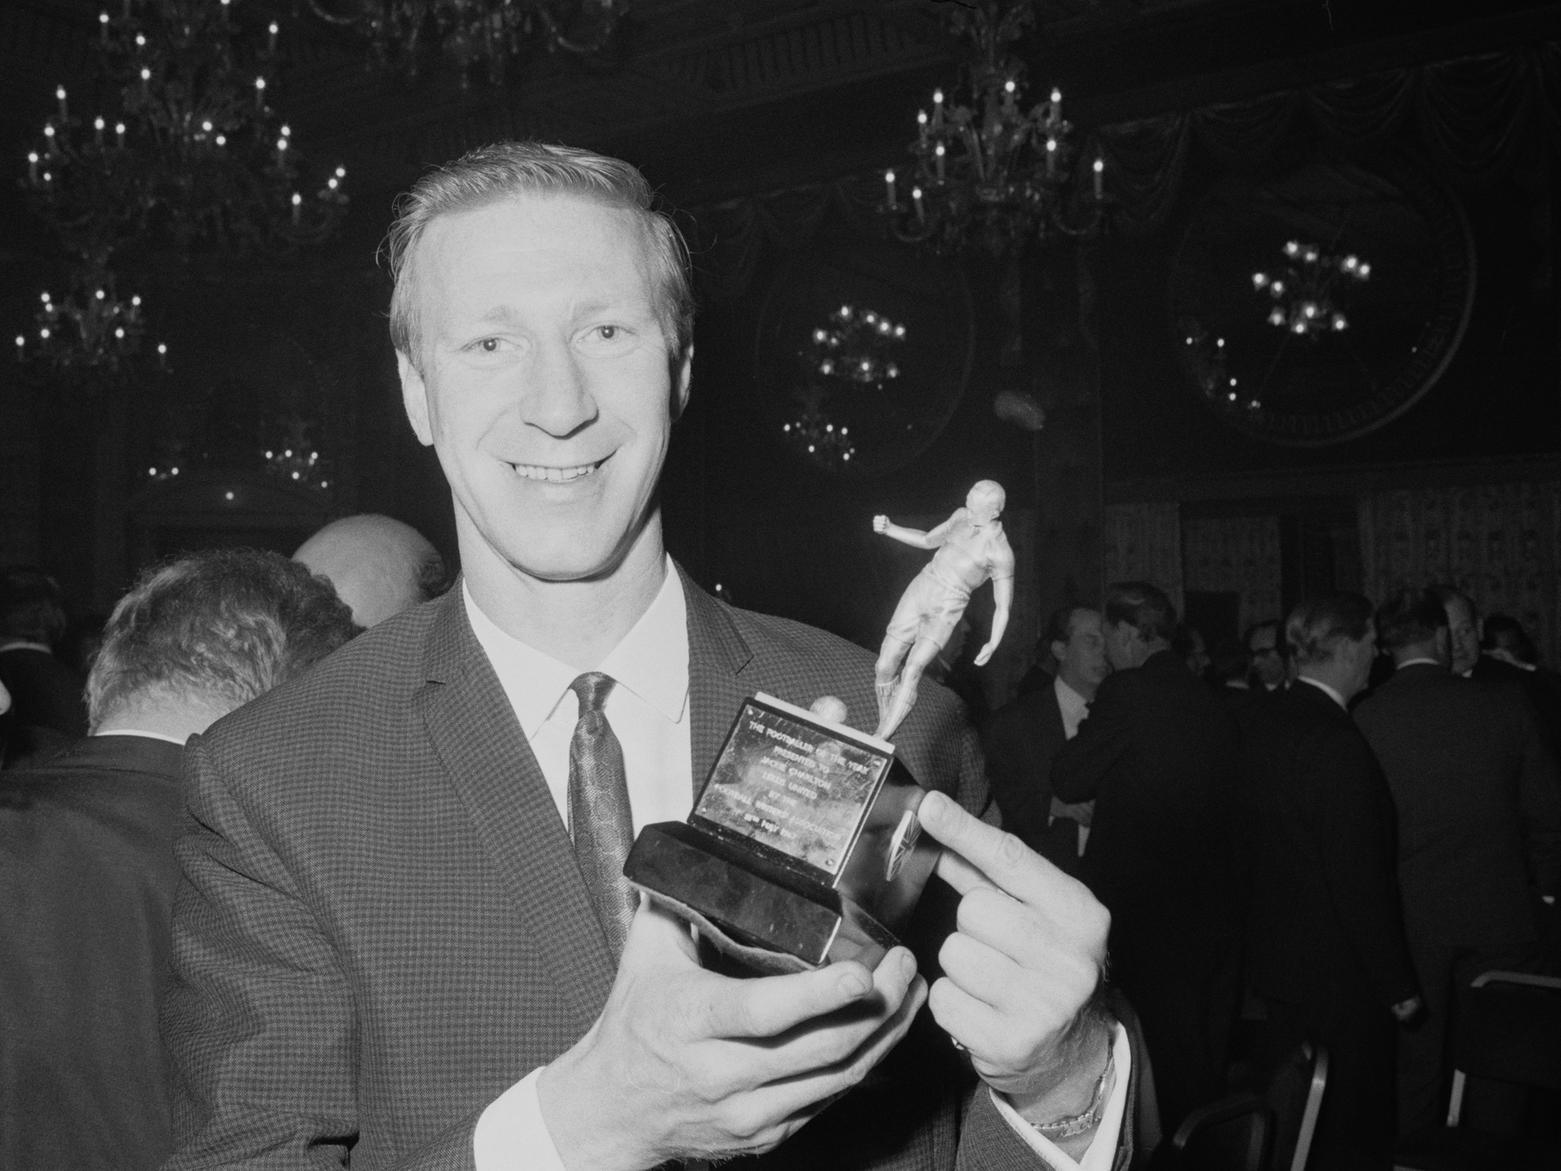 Jack Charlton of Leeds United holding the award for 'Footballer of the Year